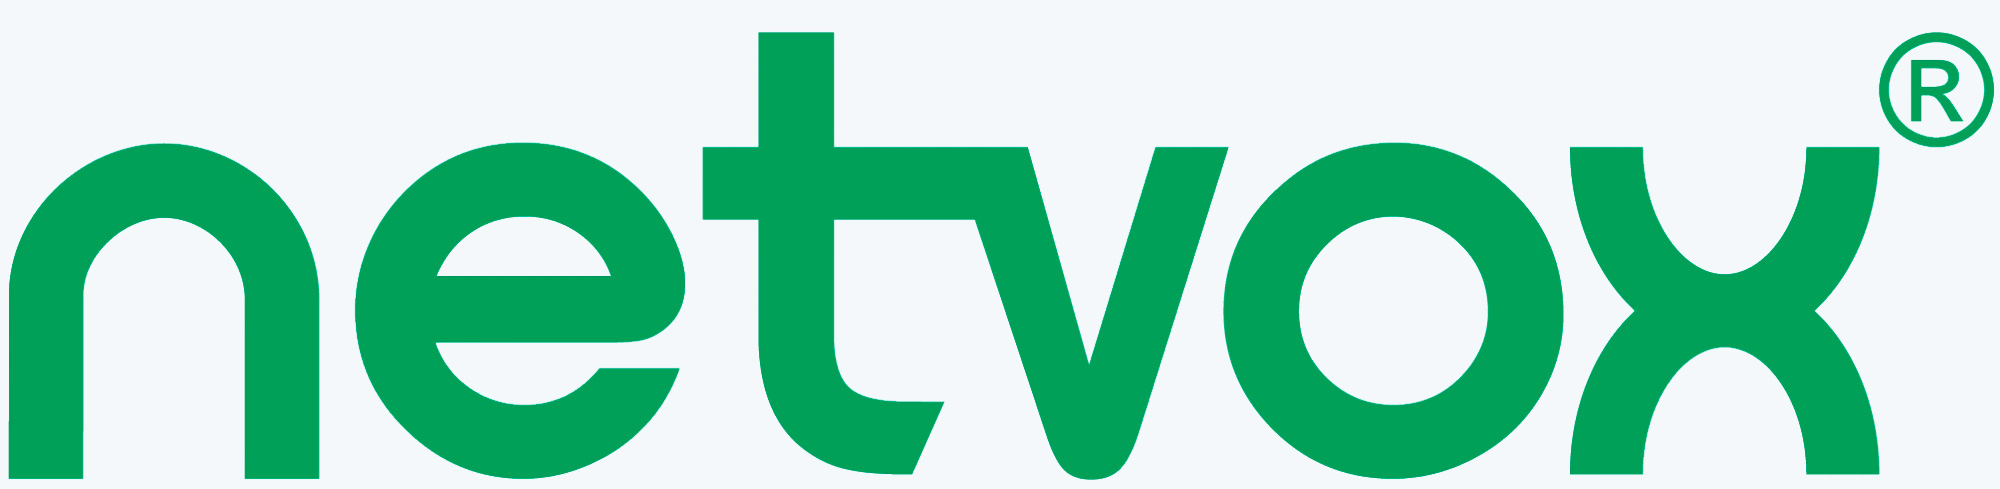 Netvox Logo